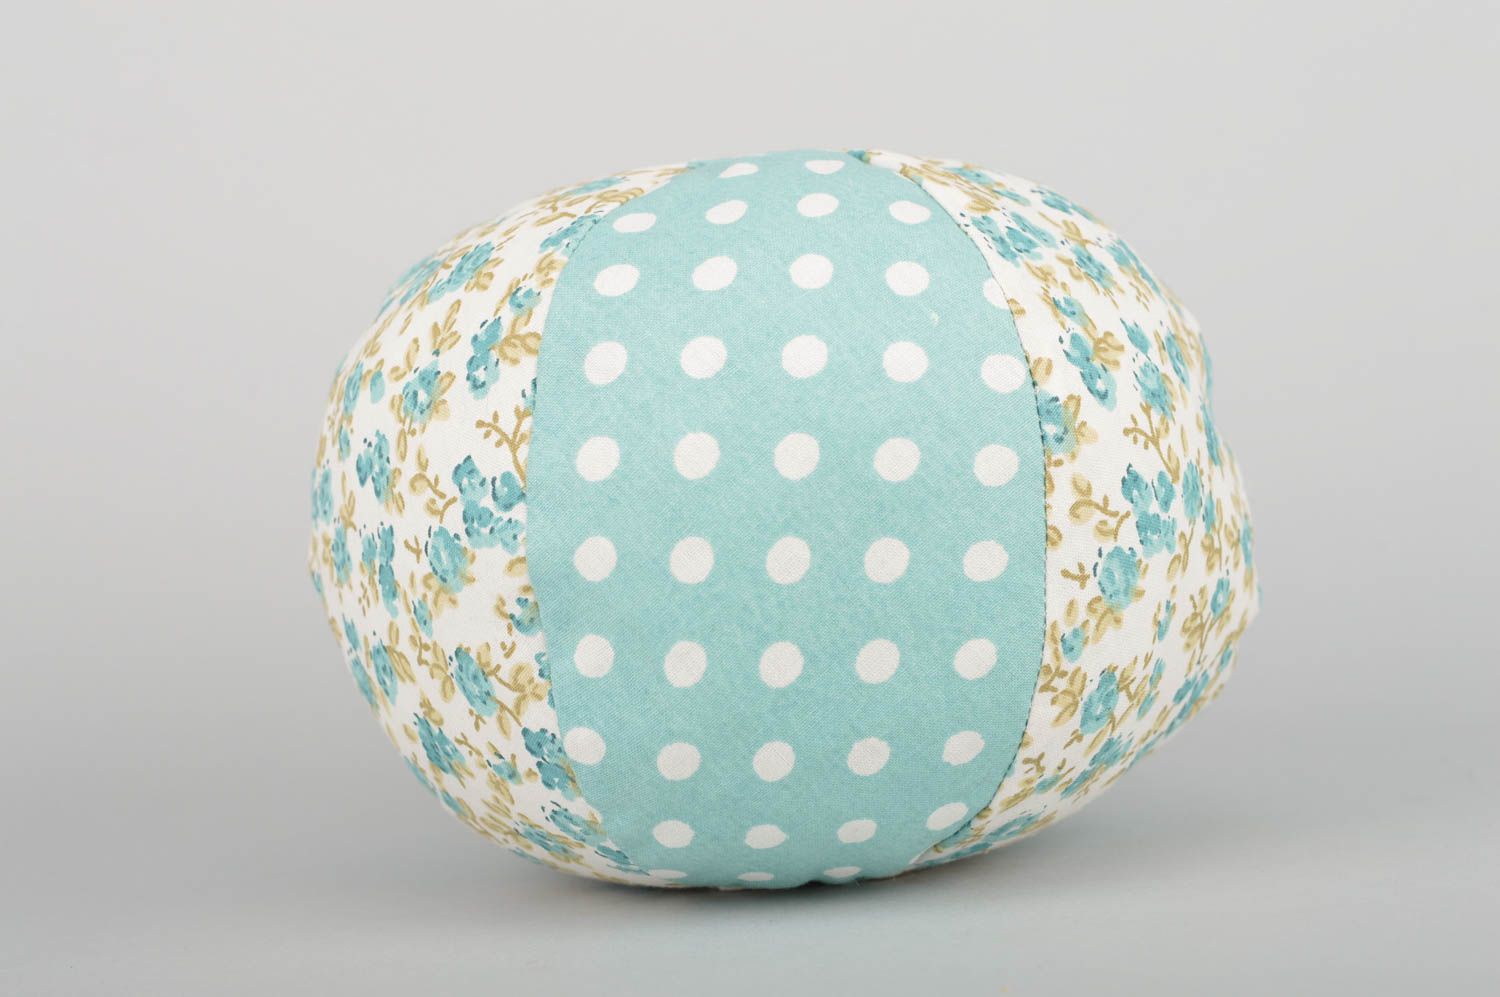 Blue soft handmade fabric toy ball for children handmade nursery decor ideas photo 5